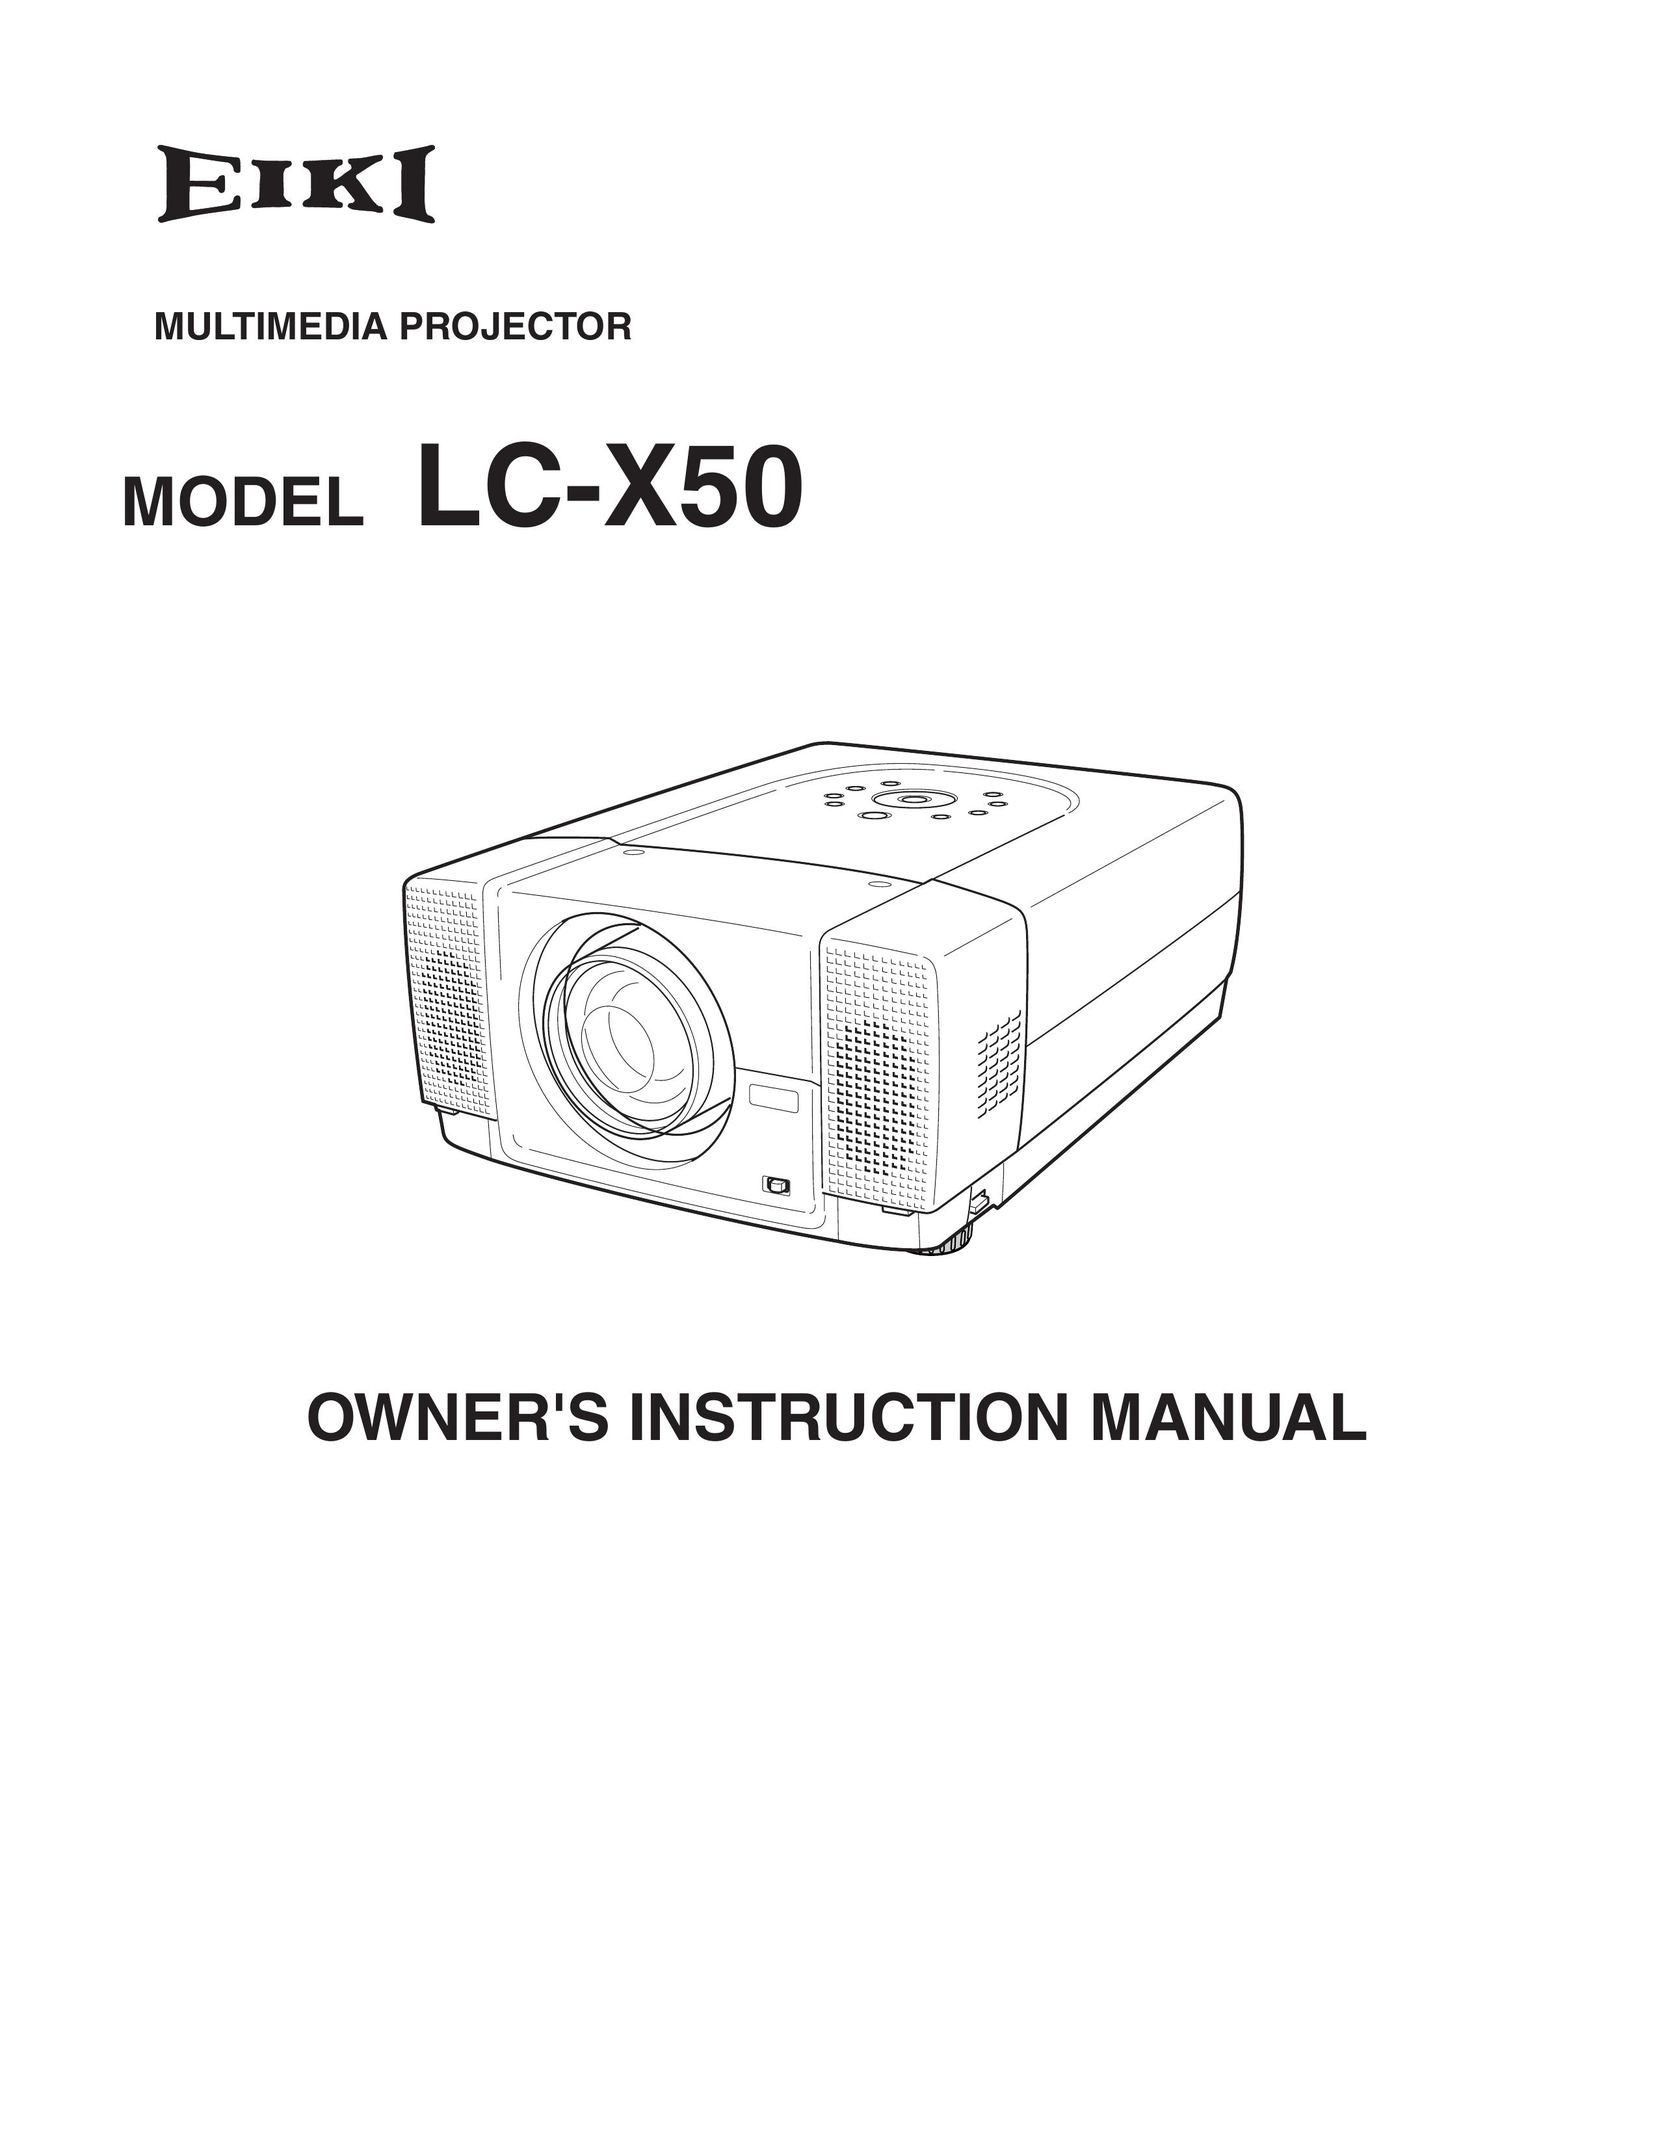 Eiki LC-X50 Fitness Equipment User Manual